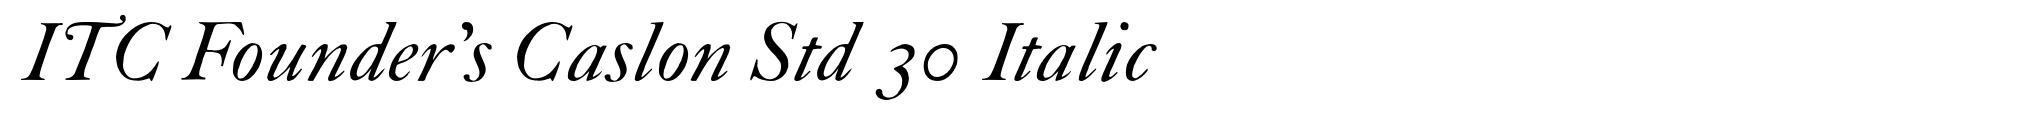 ITC Founder's Caslon Std 30 Italic image